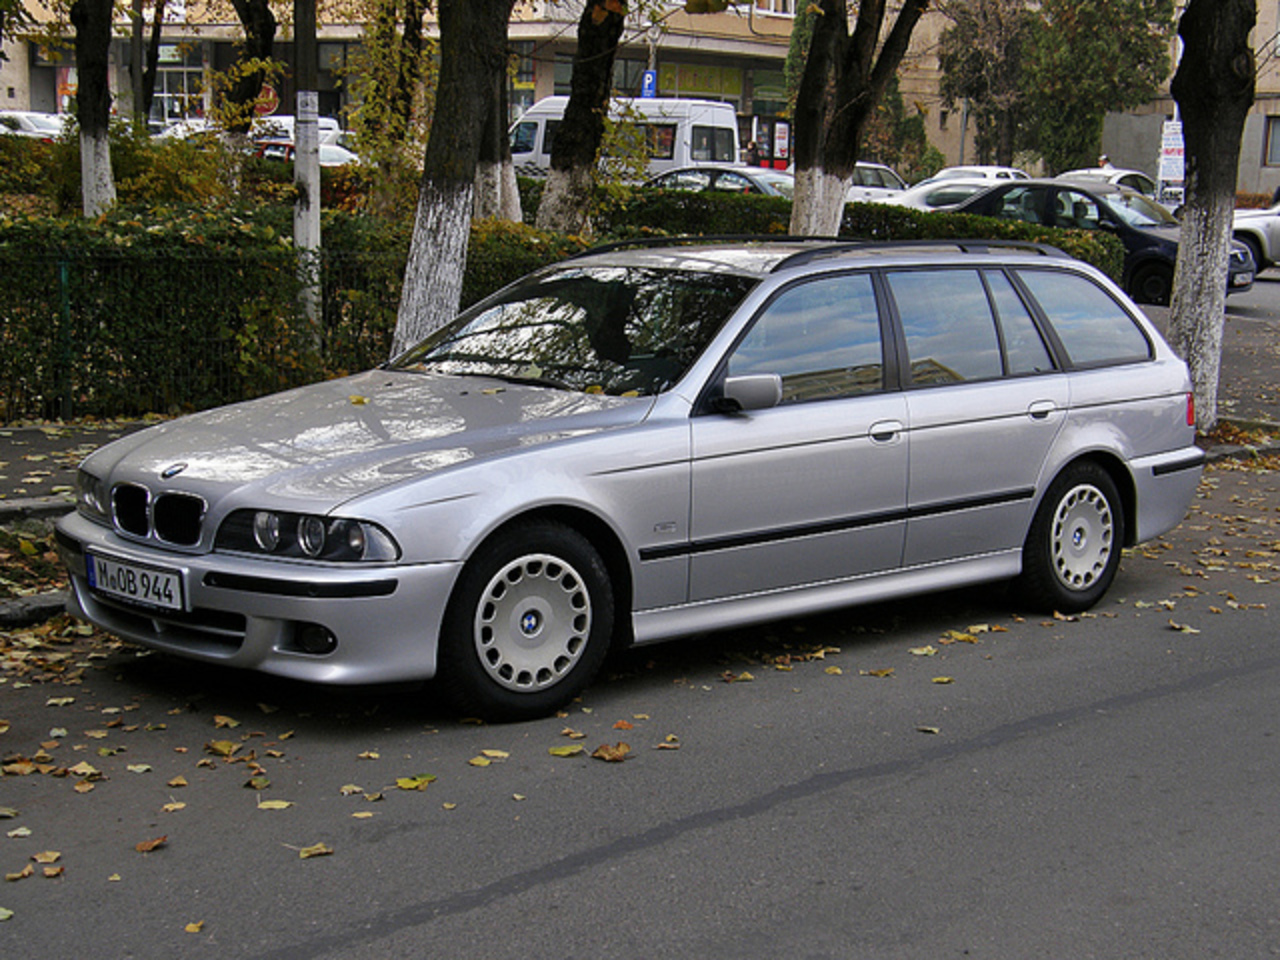 BMW M5 Touring | Flickr - Photo Sharing!